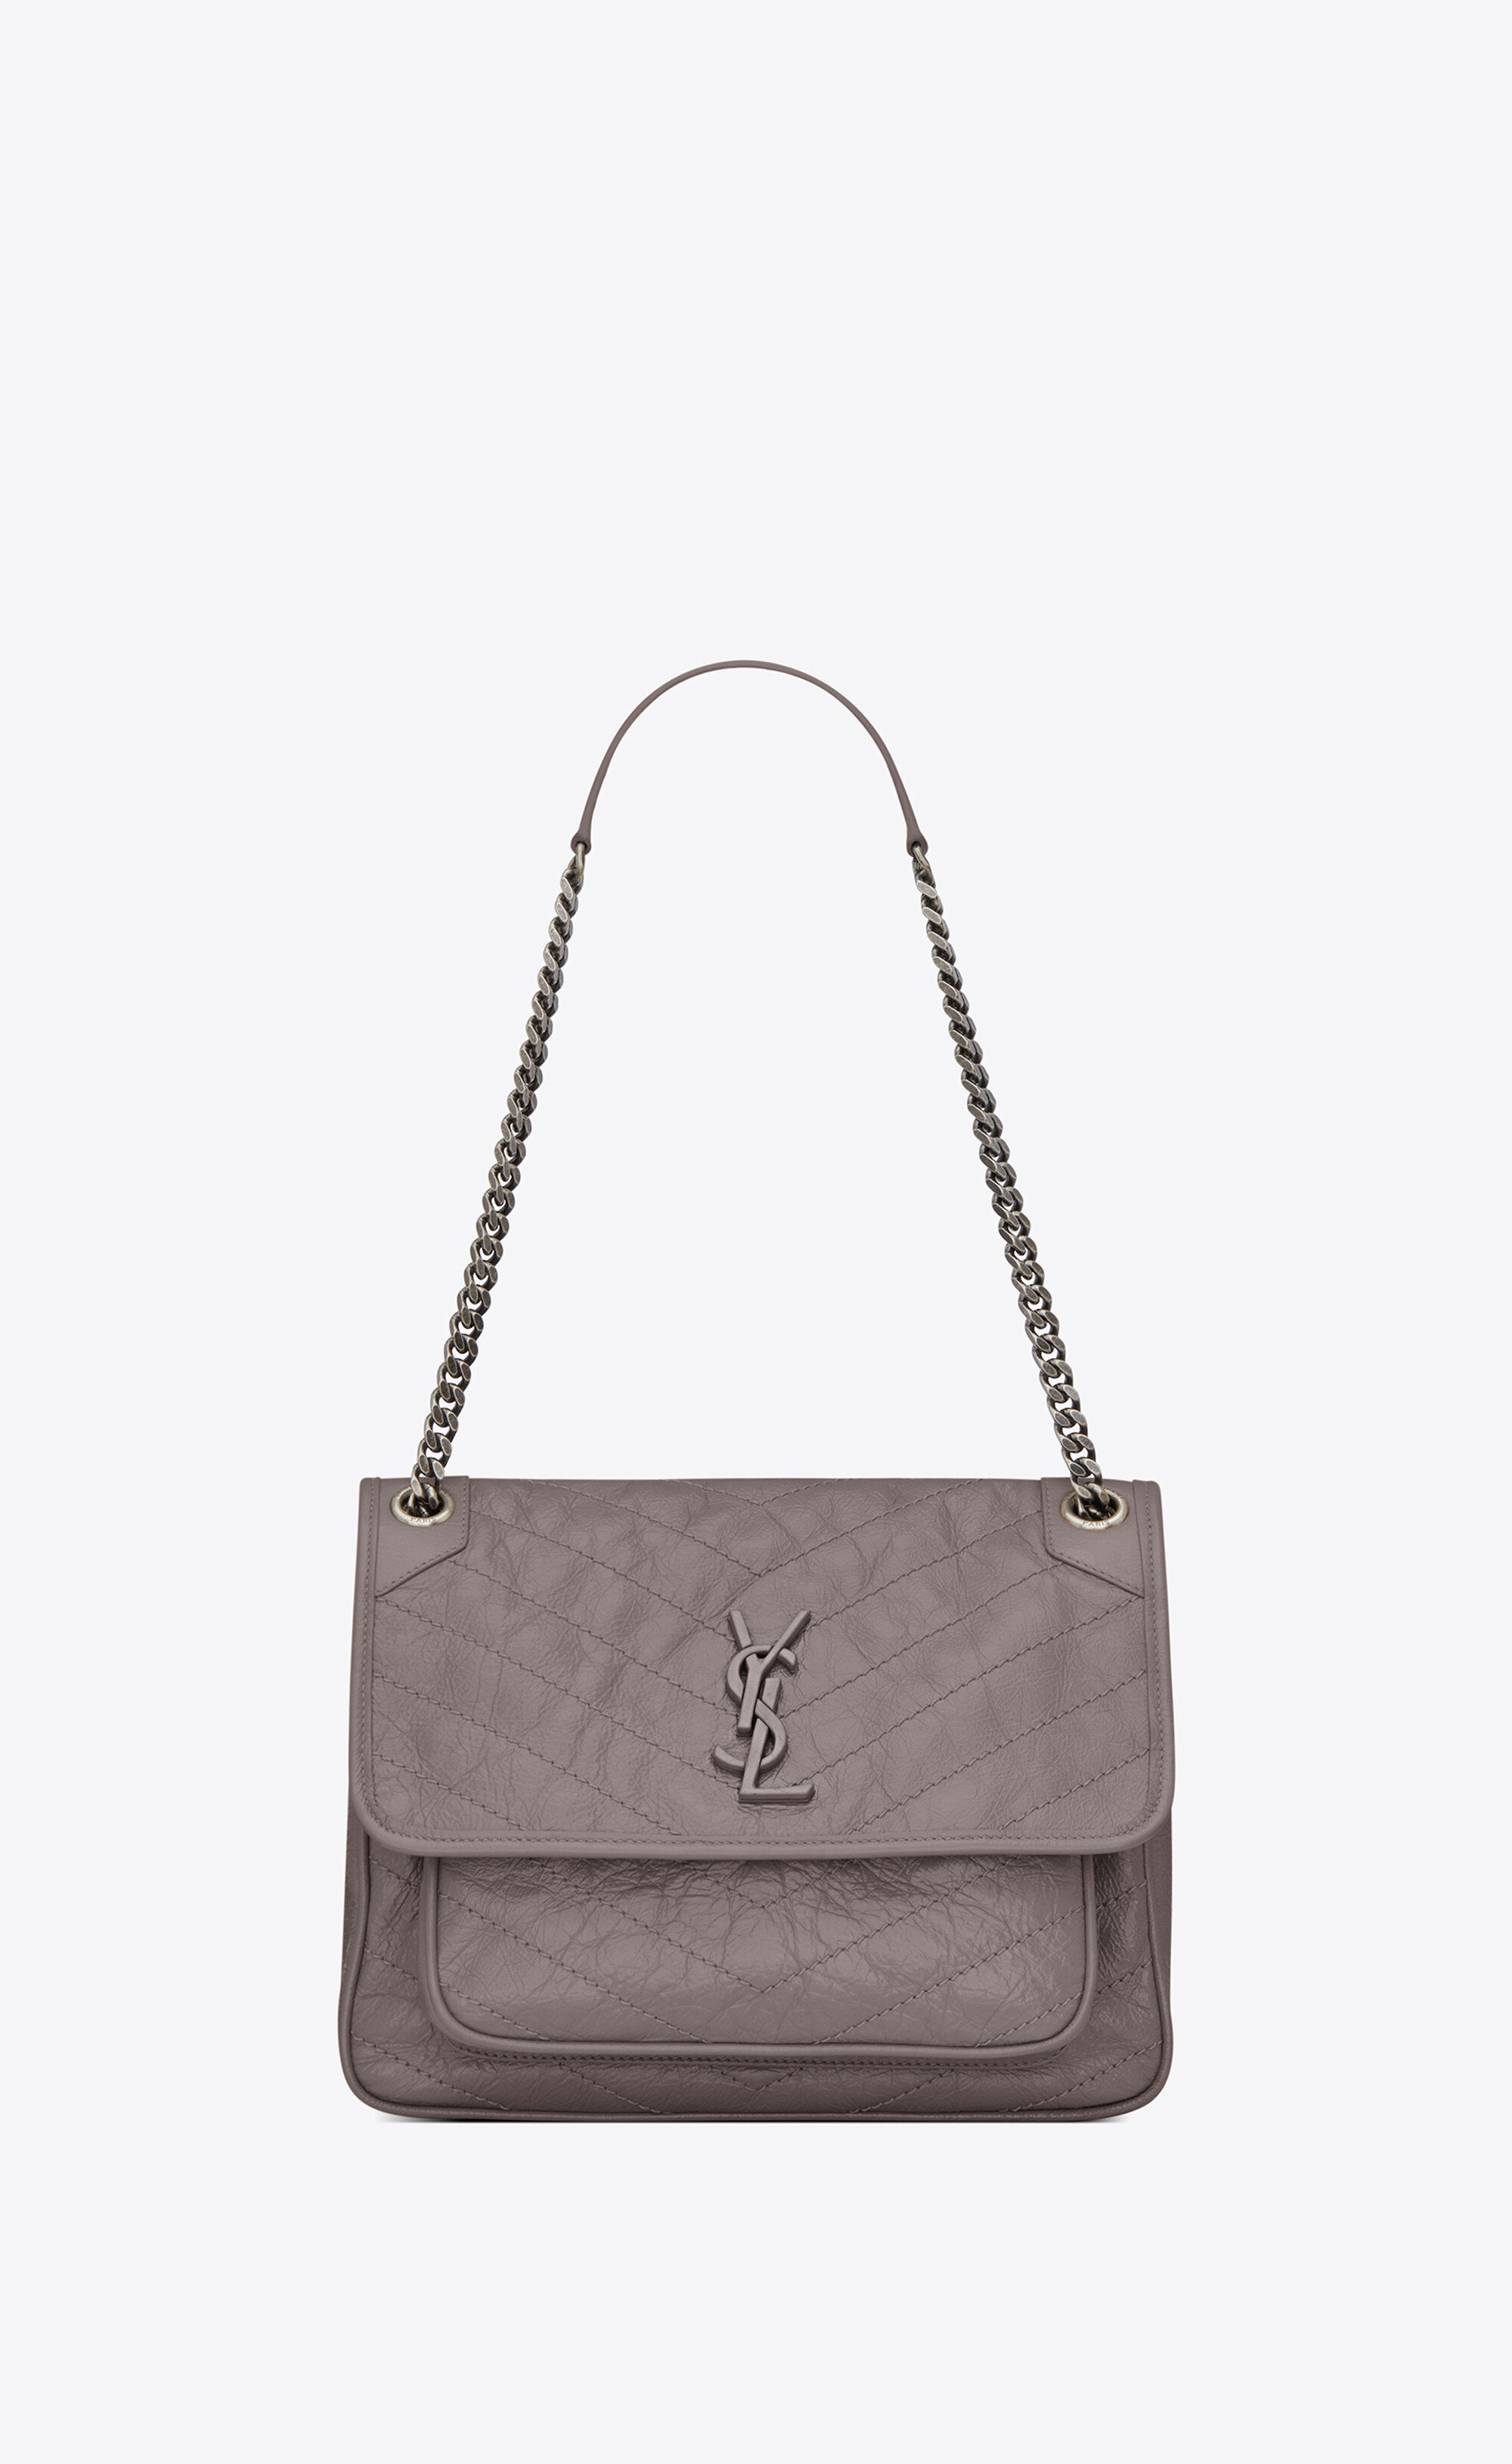 YSL NIKI Bag in Medium Size